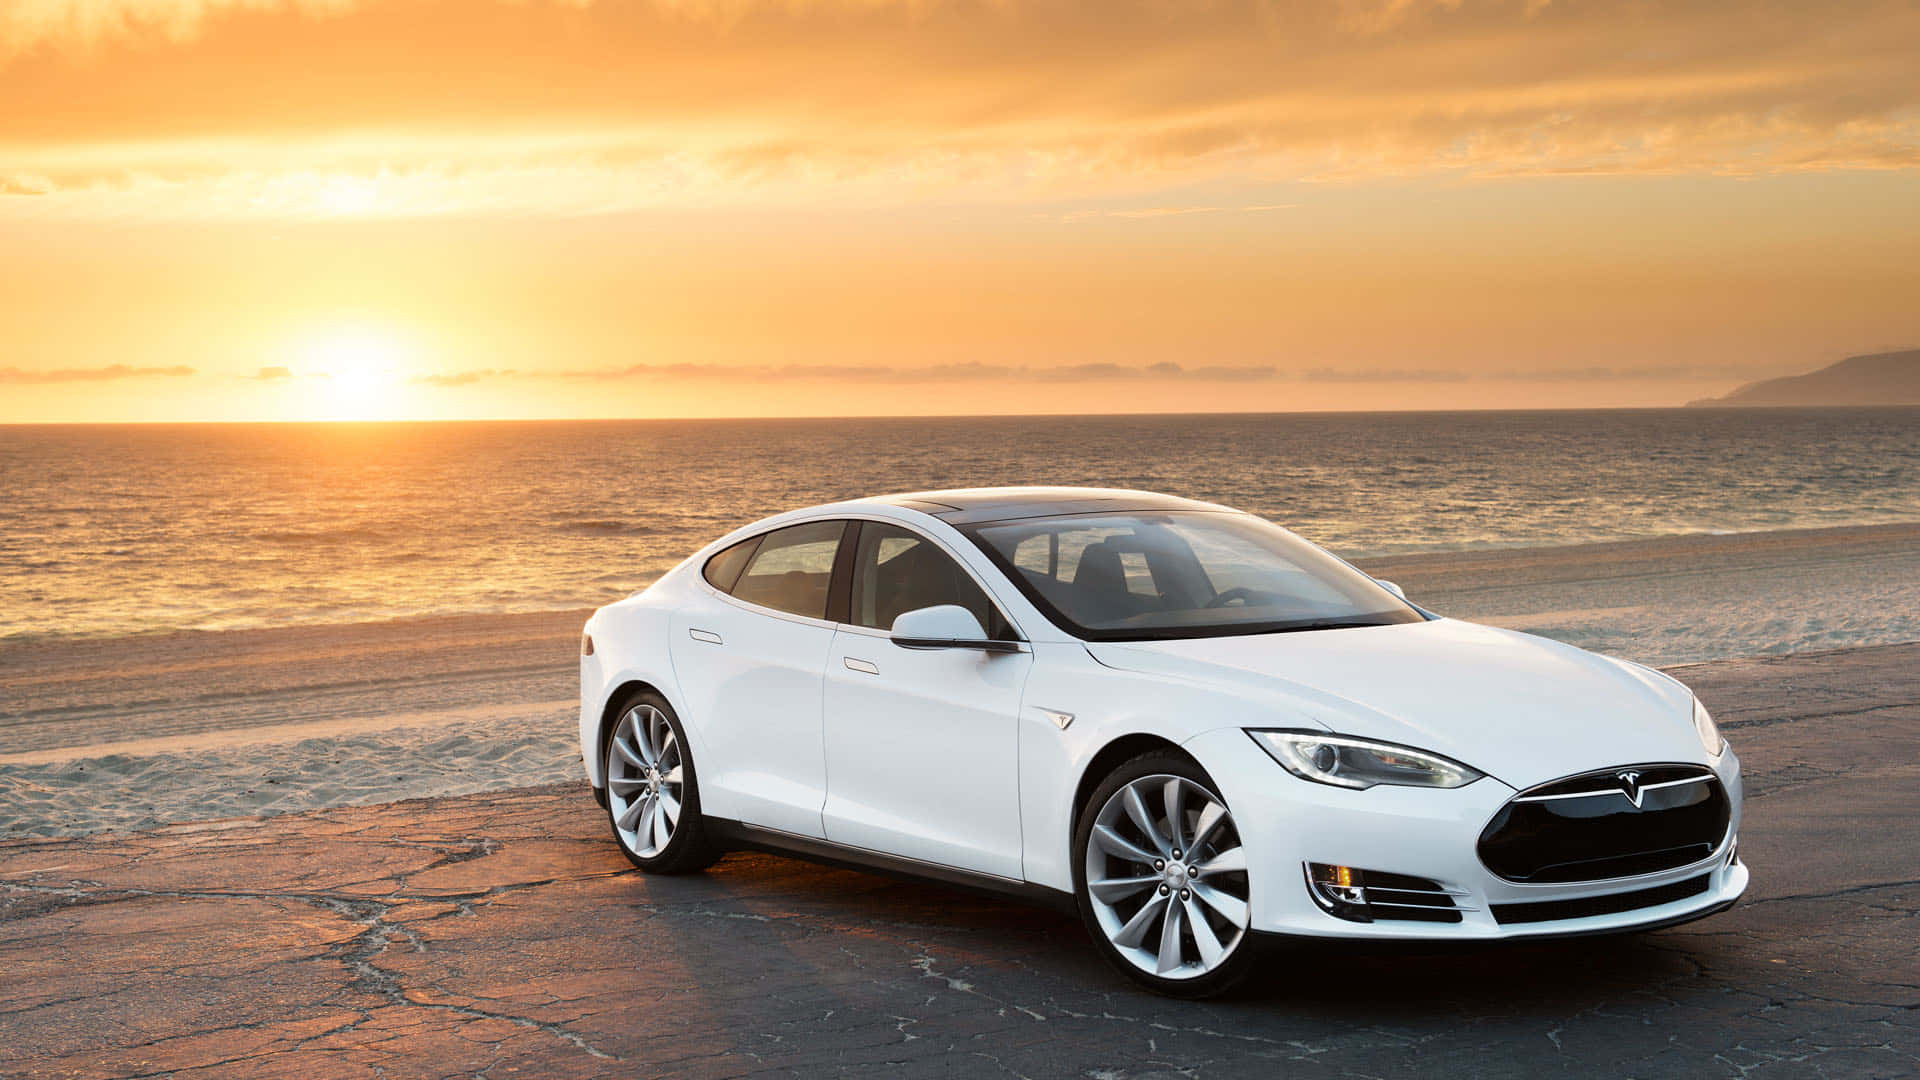 Experiencing driving pleasure in a Tesla